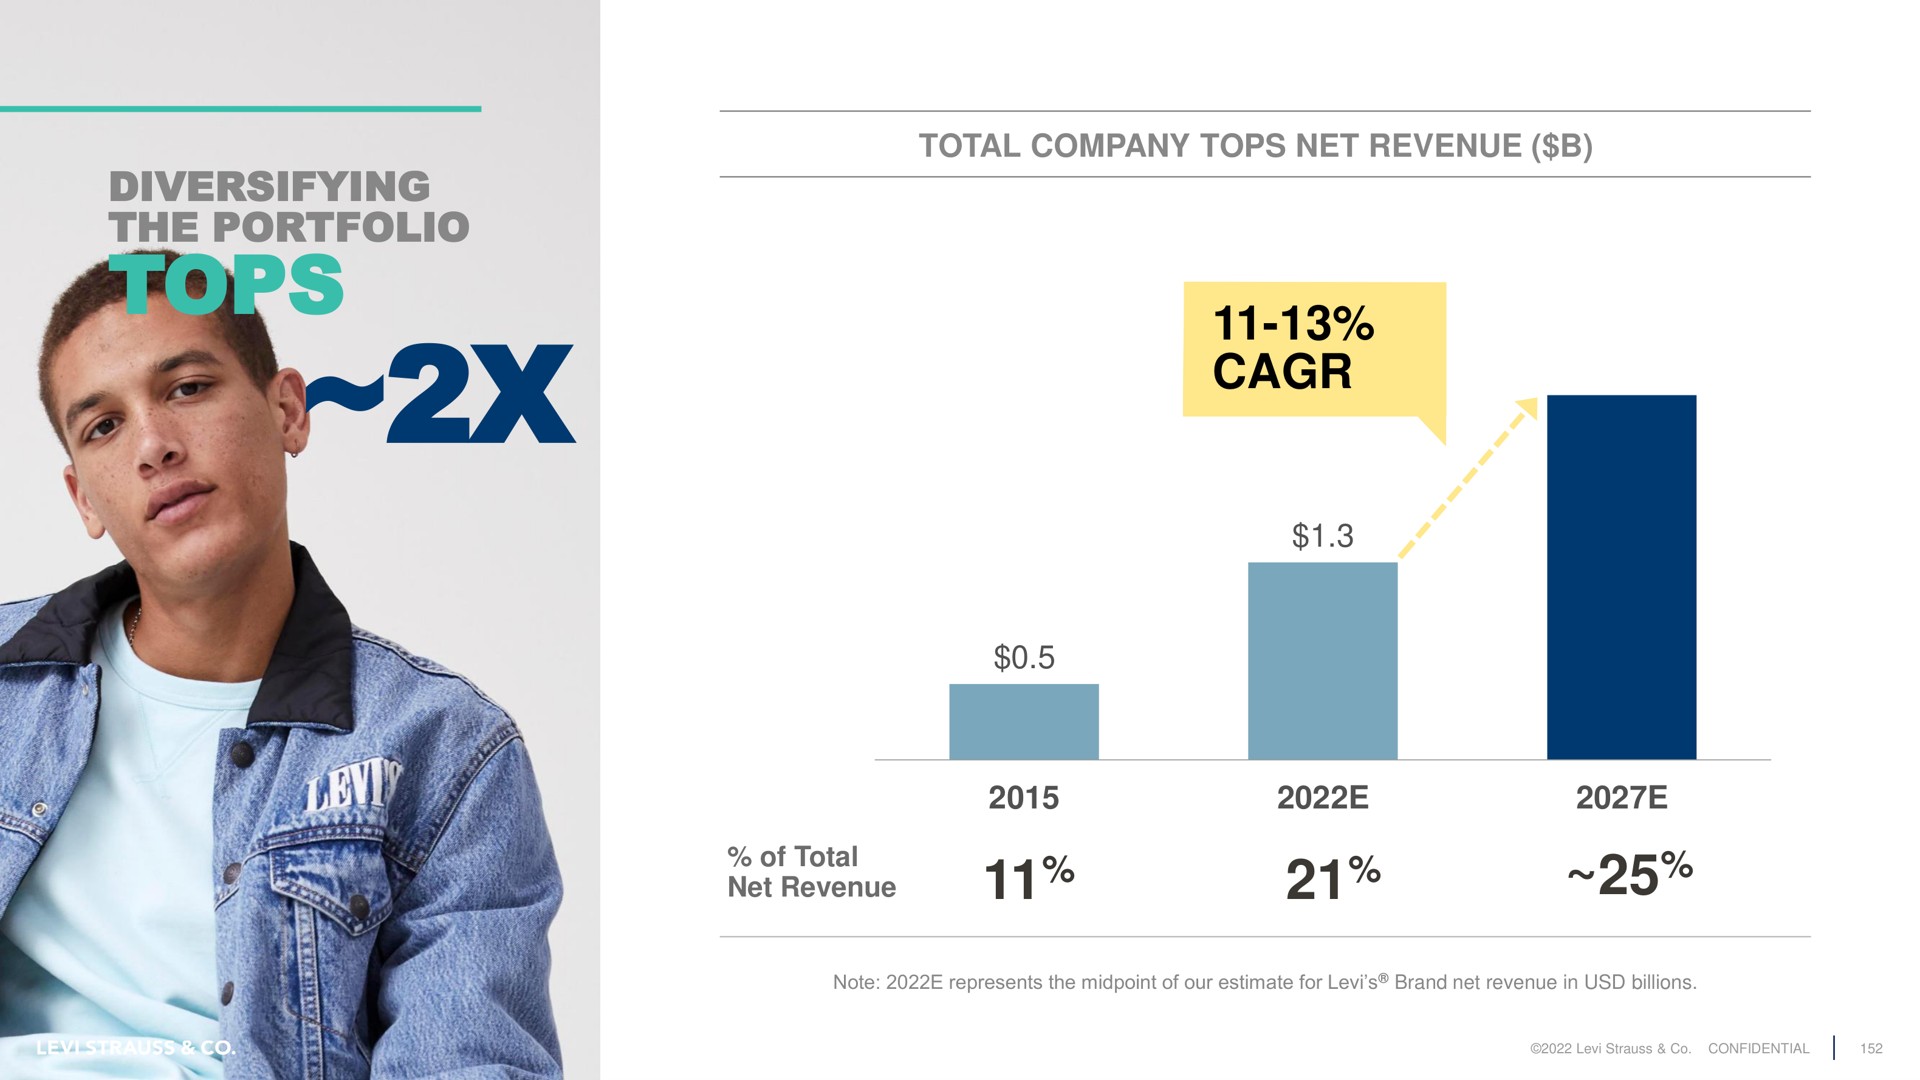 diversifying the portfolio tops total company net revenue | Levi Strauss